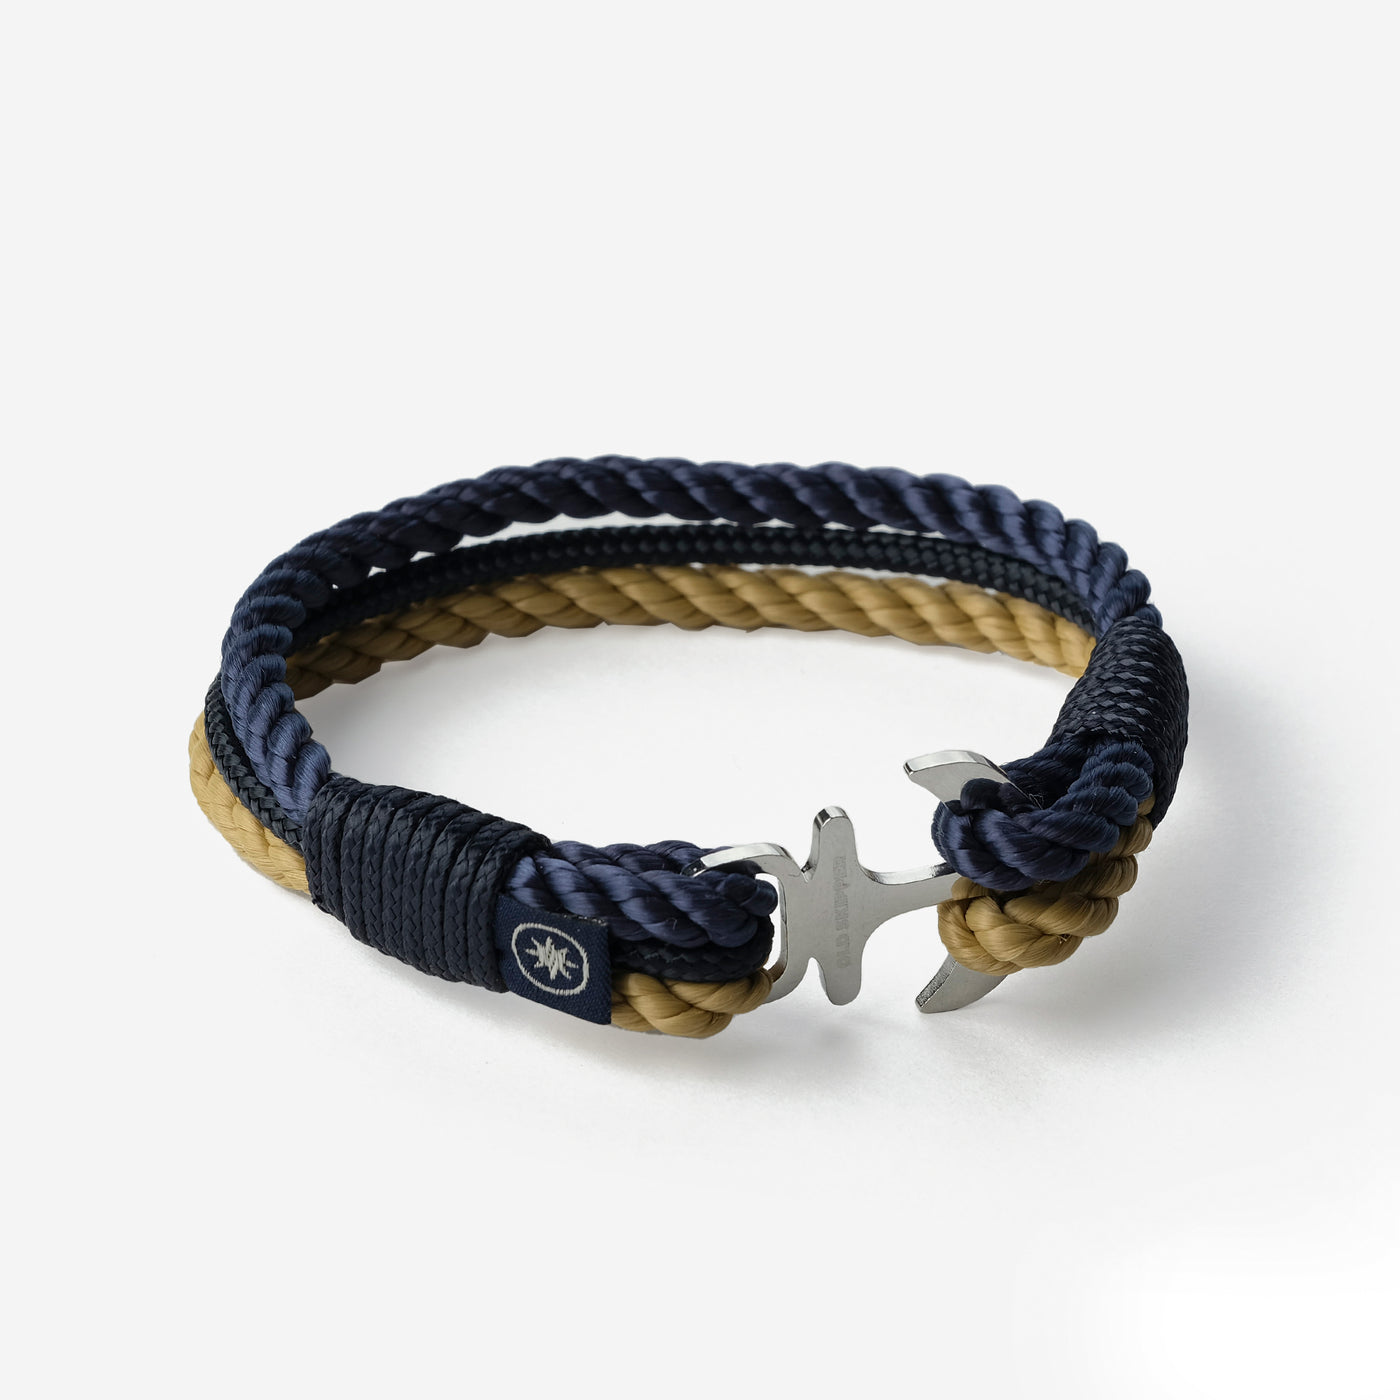 True North Explorer Nautical Rope Bracelet